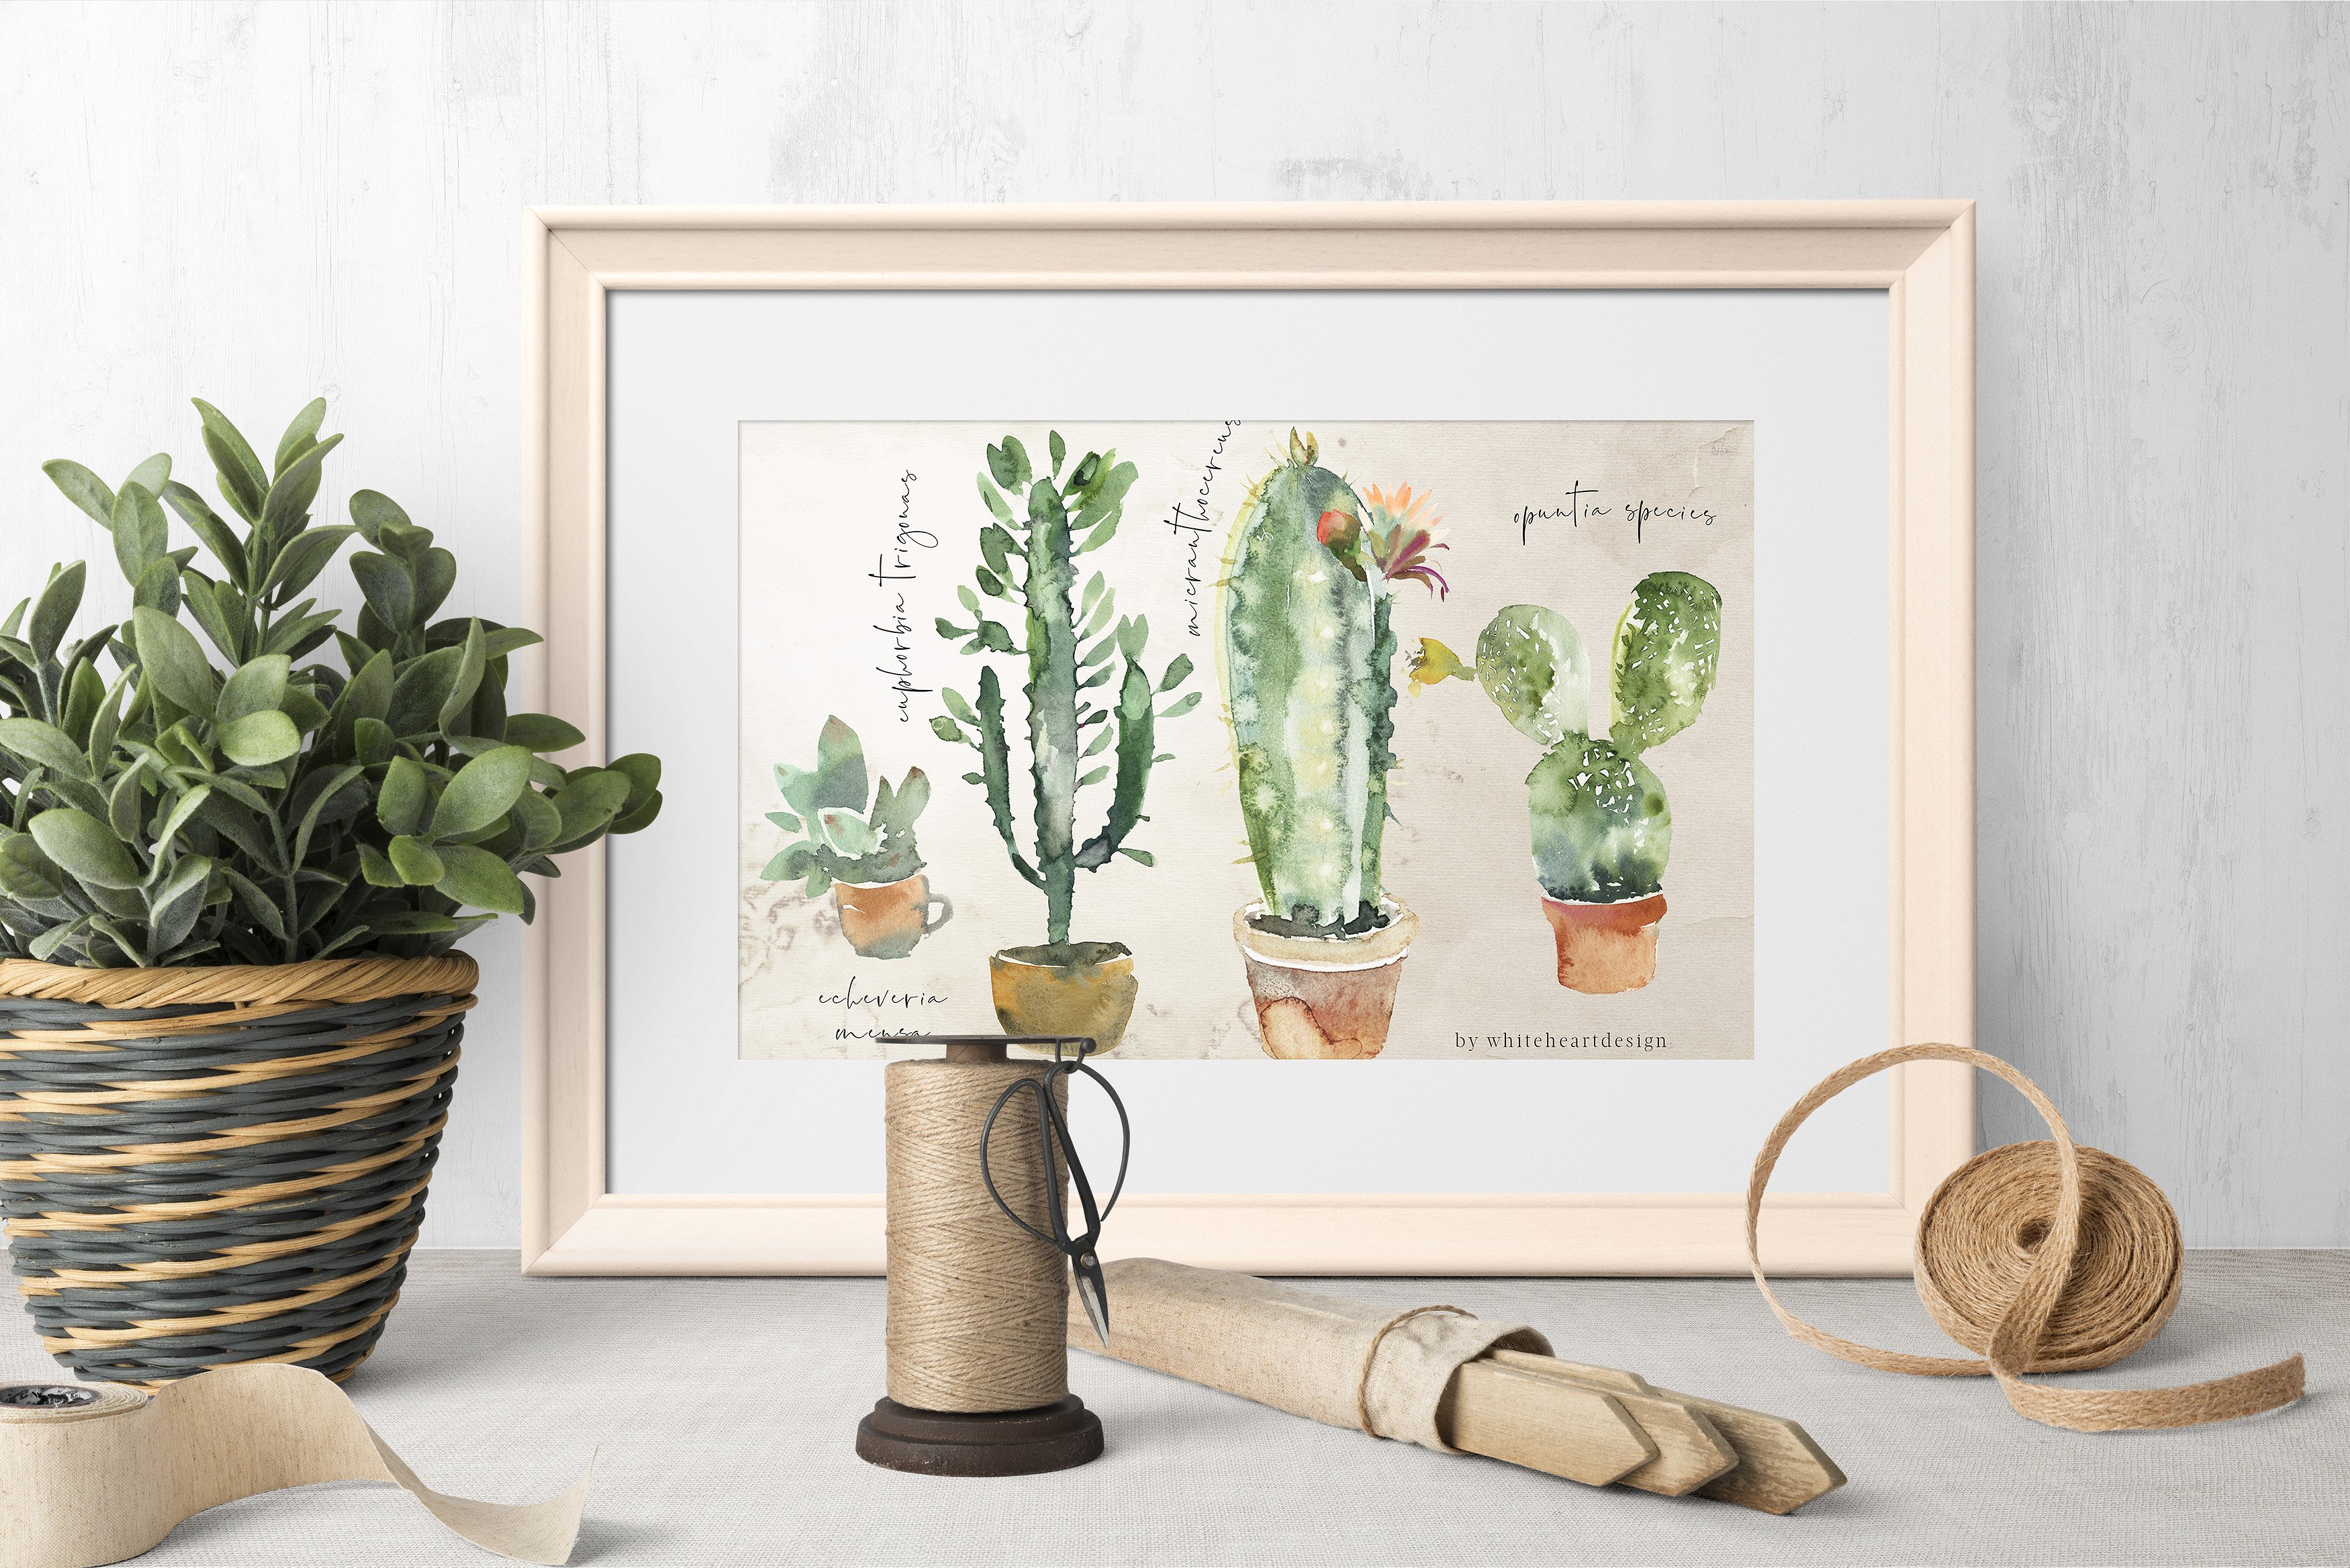 漂亮的手绘仙人掌多肉花卉PNG剪贴画集 Beautiful Hand-Painted Cactus Succulent Flower PNG Clip Art Set插图10